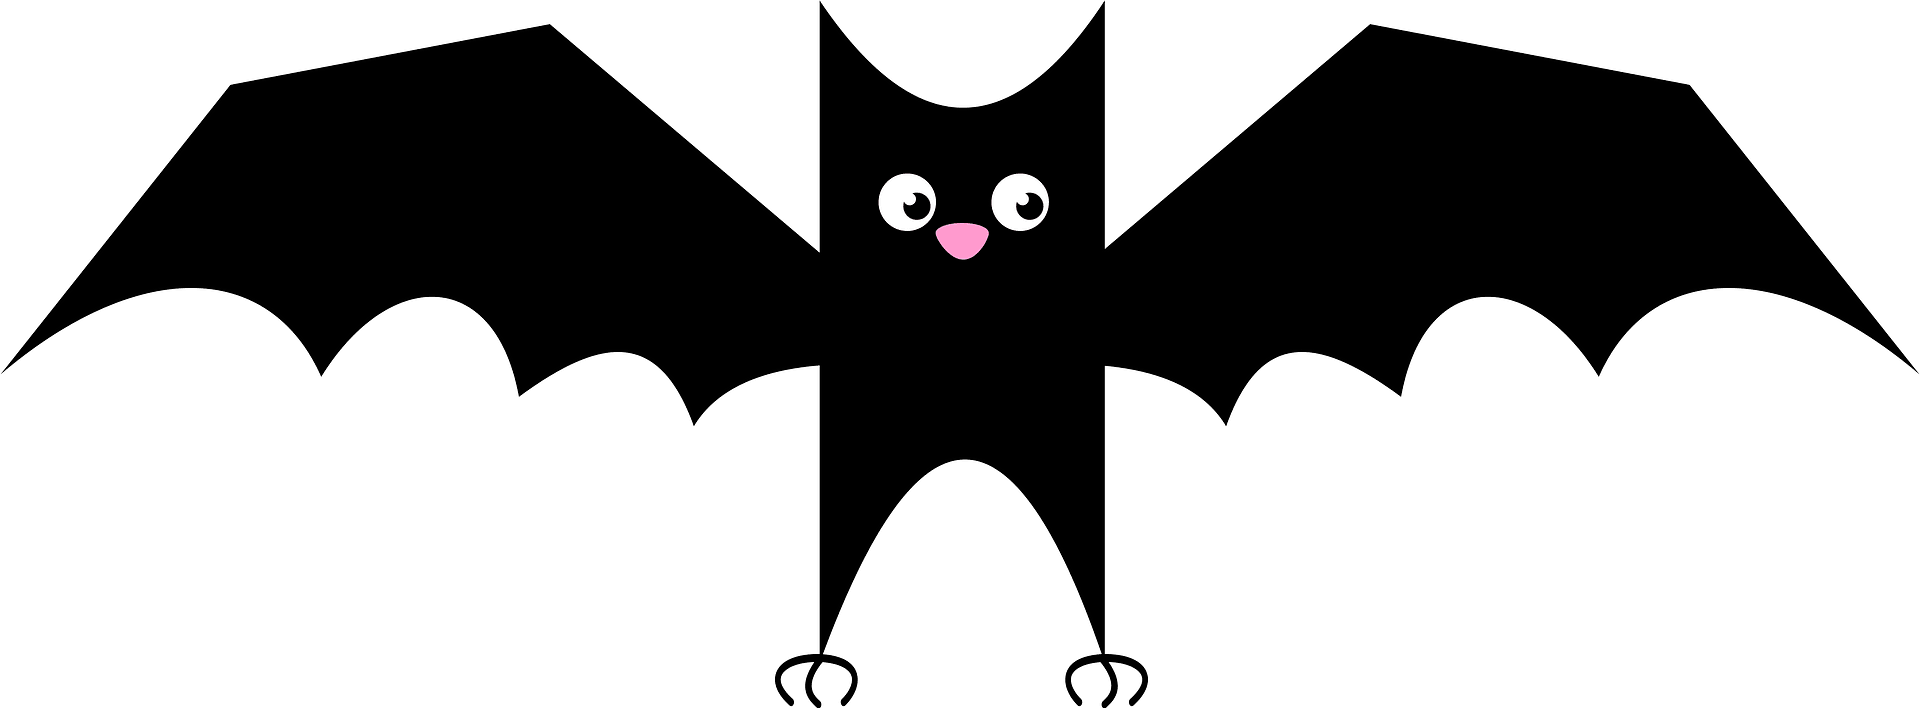 Morcego Halloween PNG HQ image